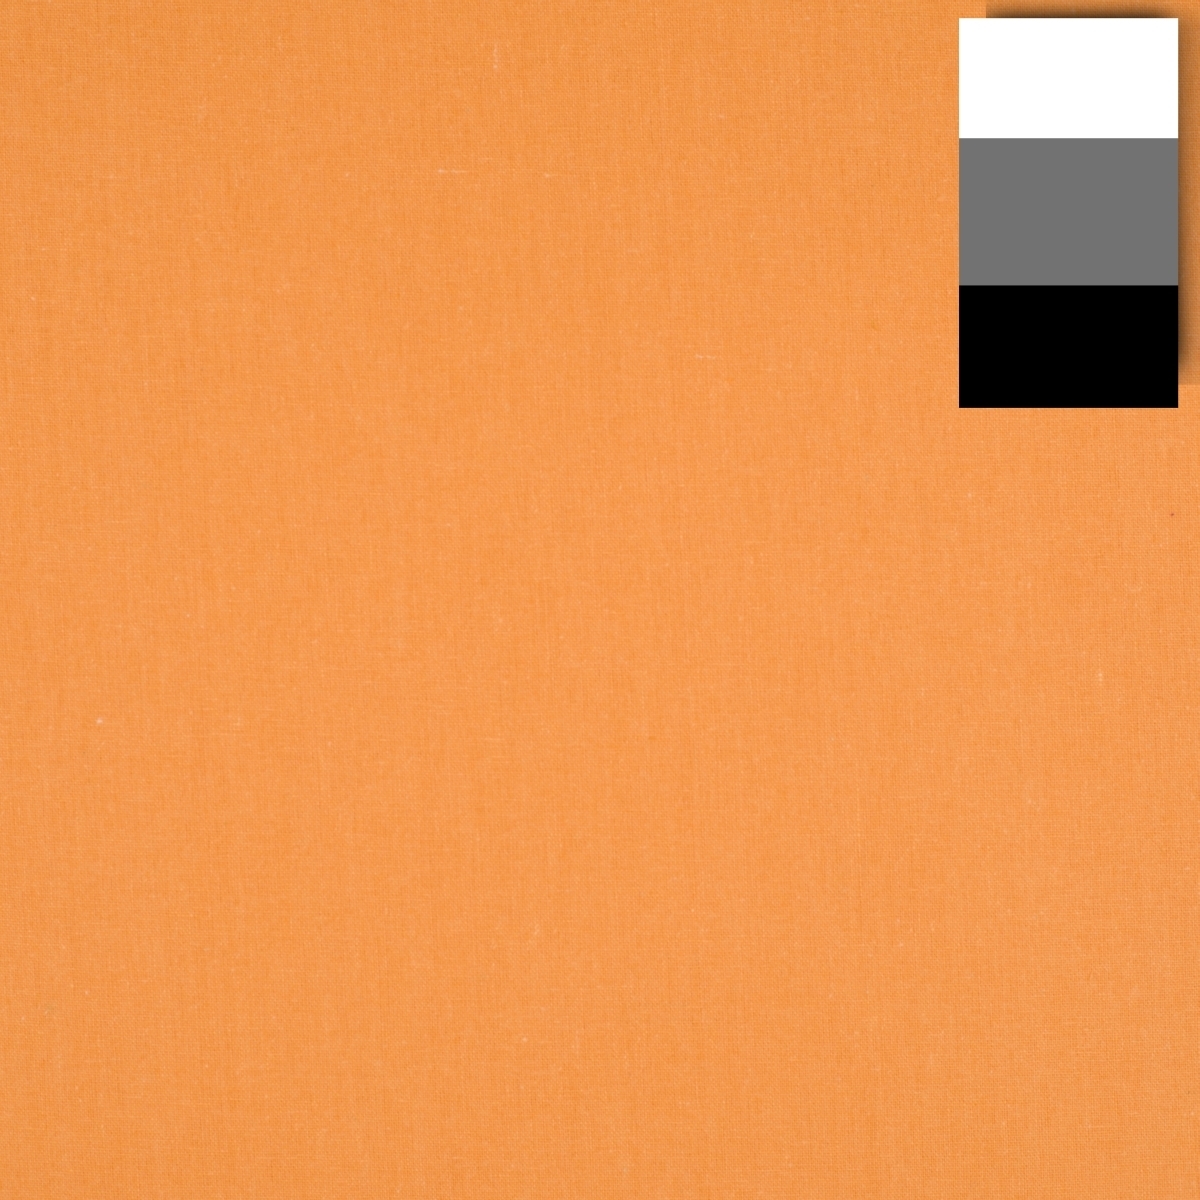 Walimex Cloth Background 2,85x6m, orange